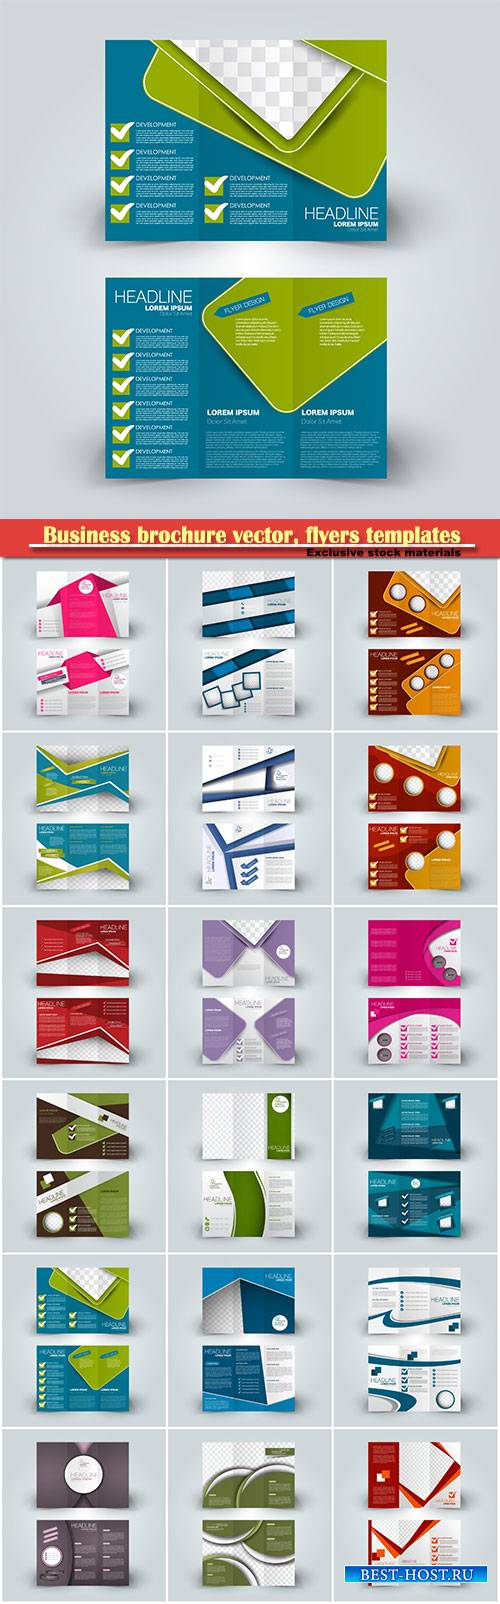 Business brochure vector, flyers templates, report cover design # 99